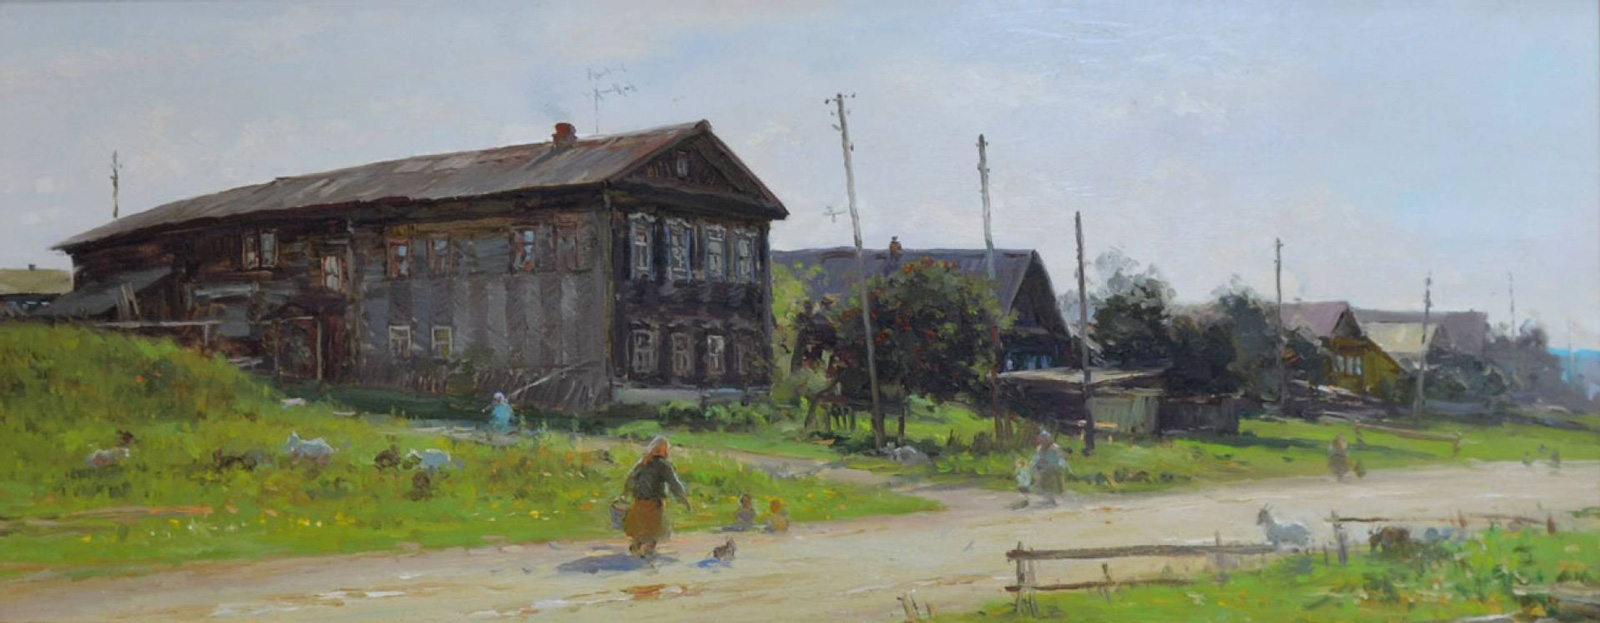 On the Street in Staroutkinsk, Rustem Khuzin, Buy the painting Oil